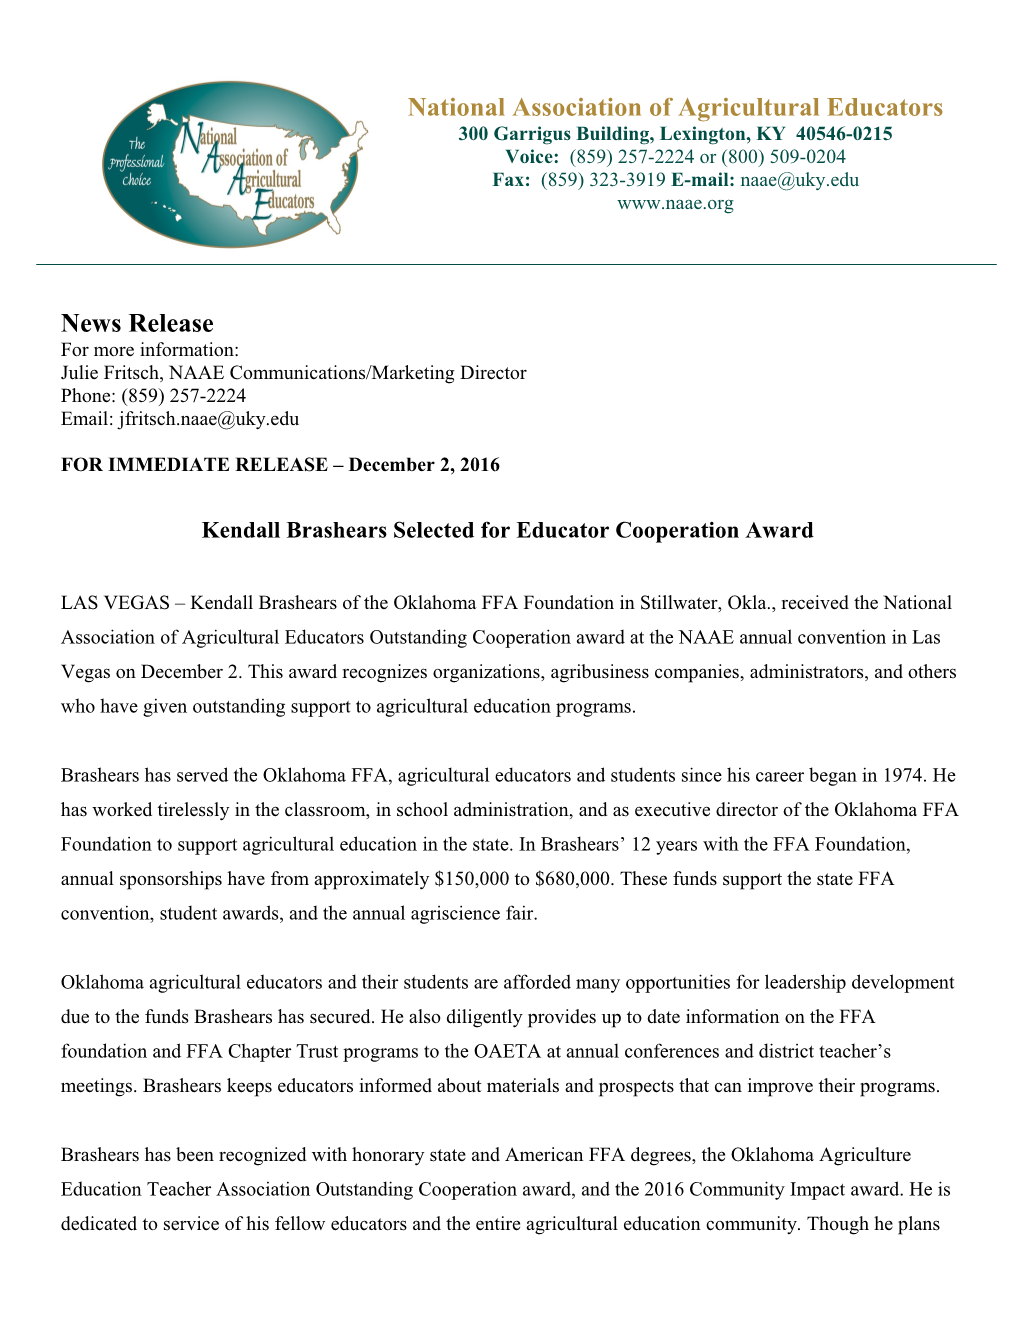 Kendall Brashearsselected for Educator Cooperation Award